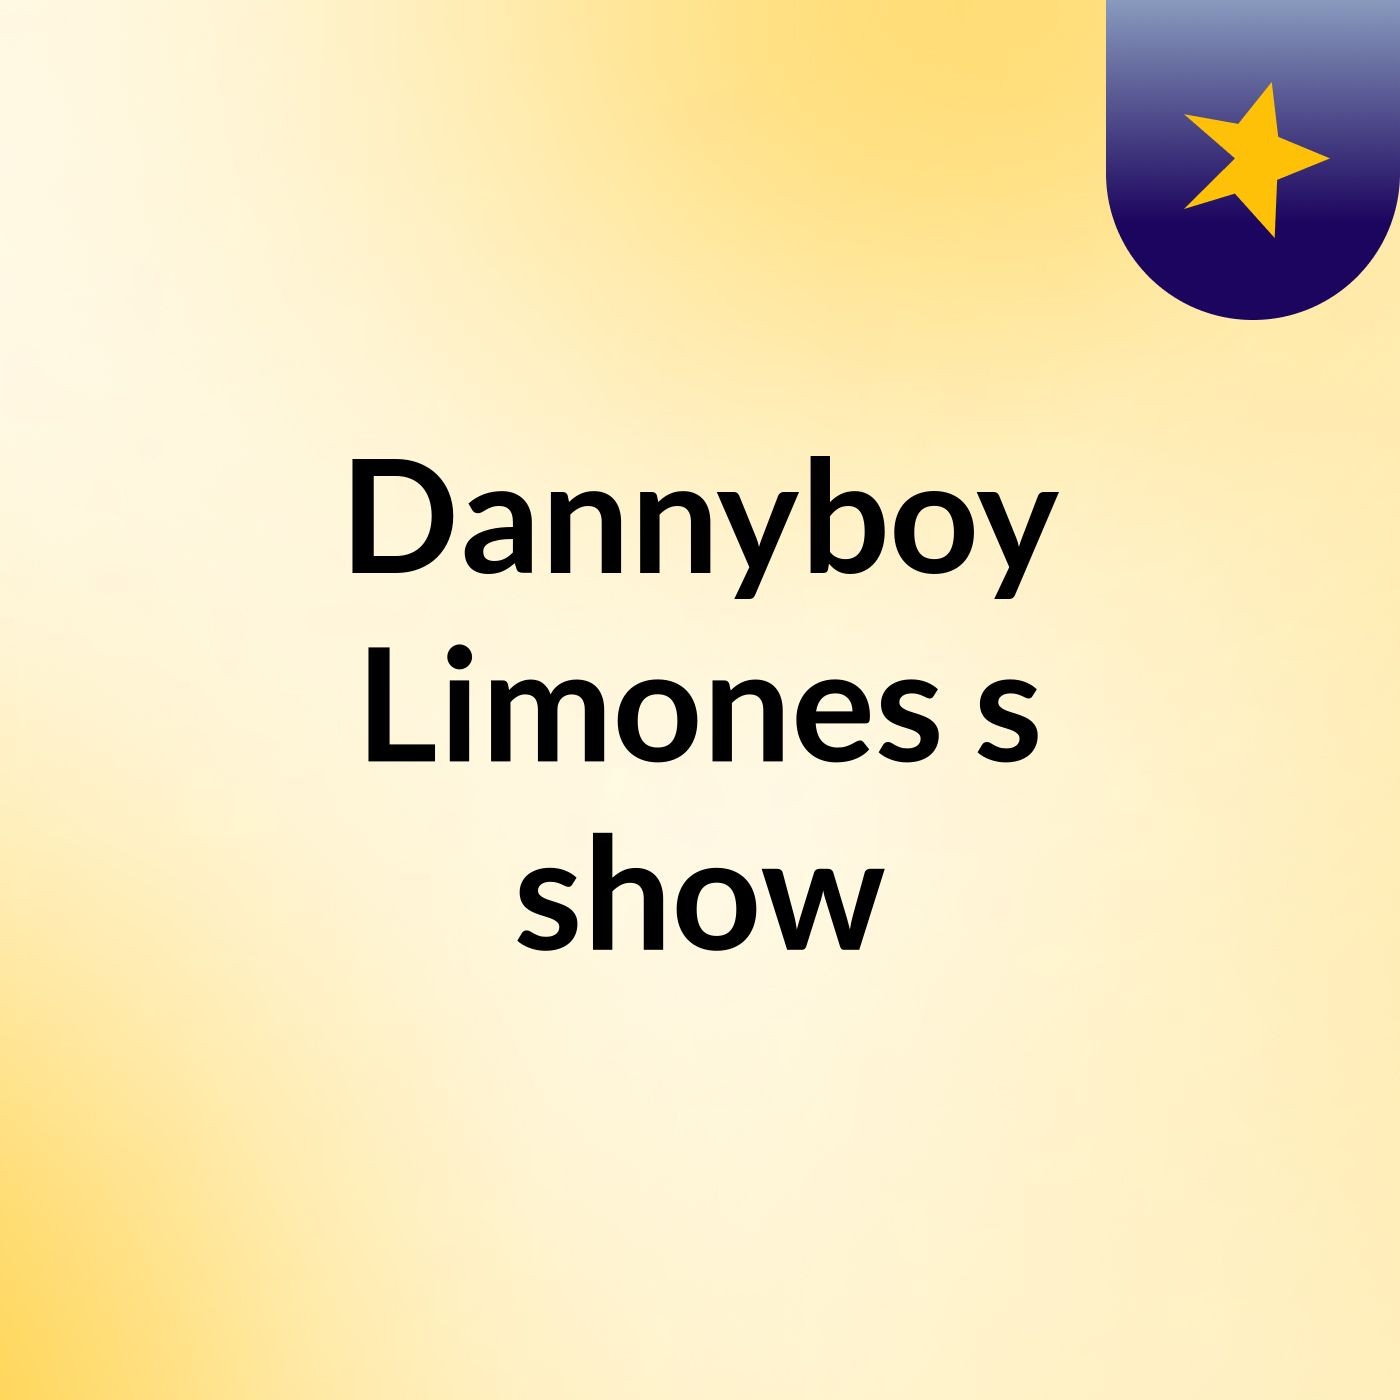 Episode 16 - Dannyboy Limones's show